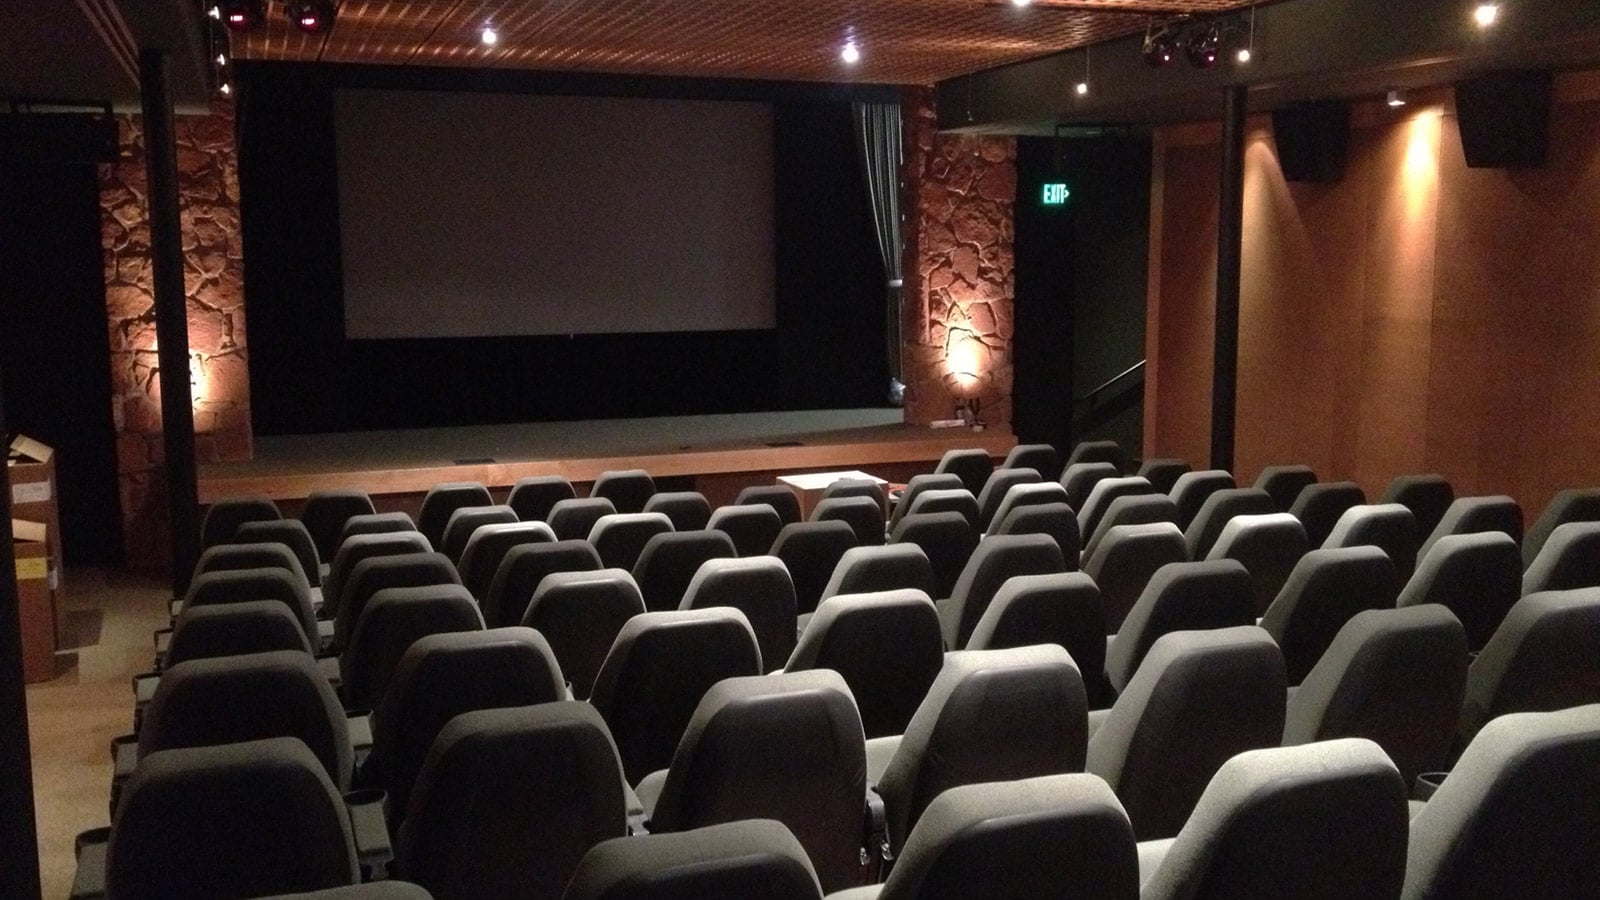 Sedona Film Festival Installs Meyer Sound EXP to Celebrate Best in Cinematic Art